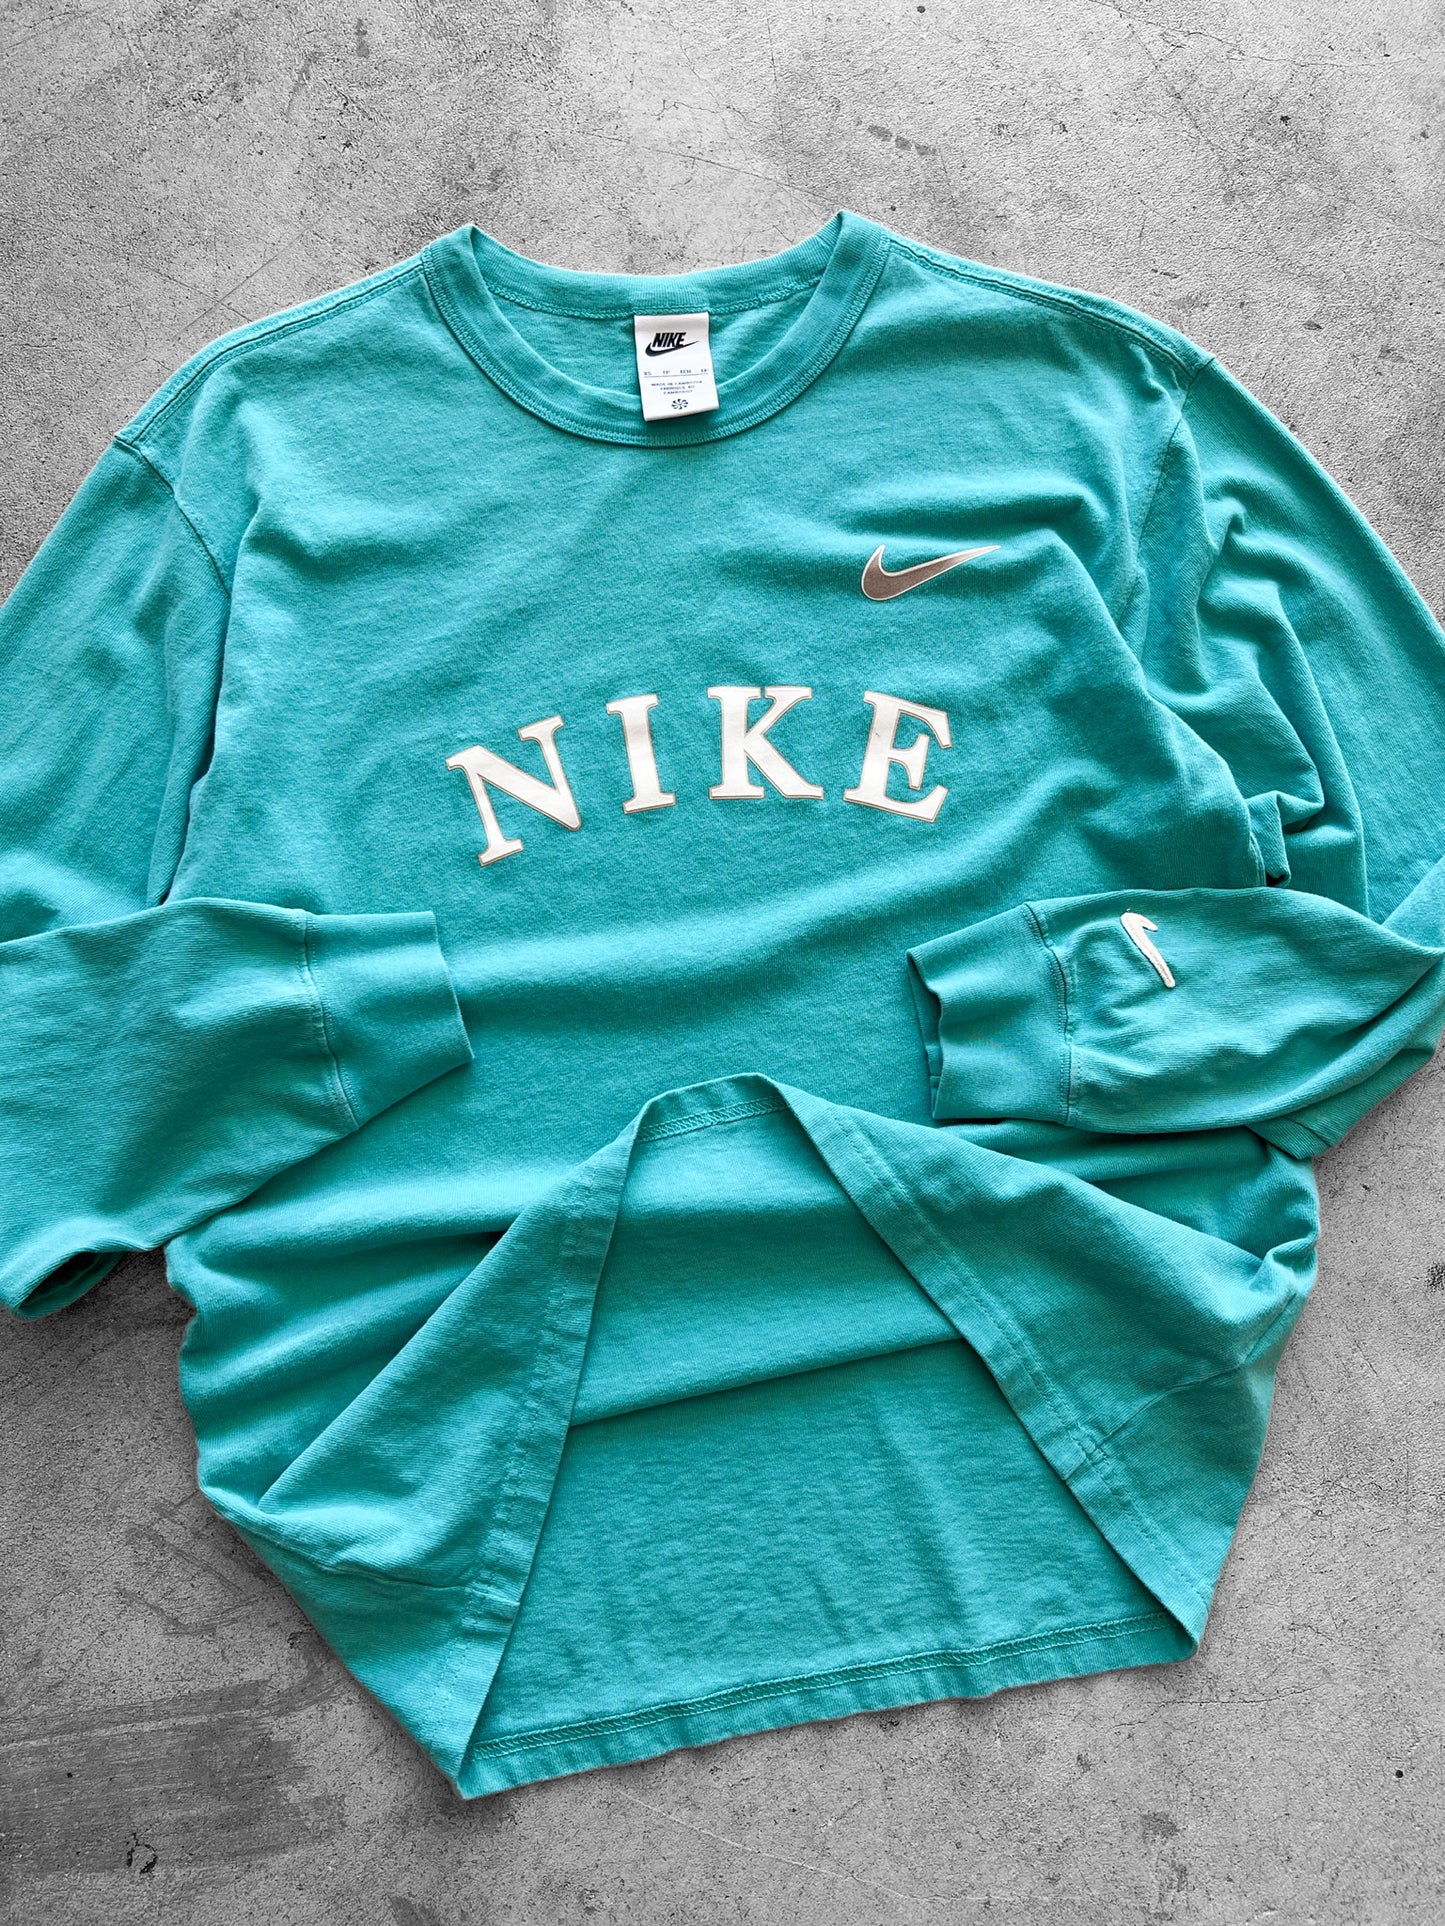 Nike Swoosh Spellout Longsleeve Shirt - XS